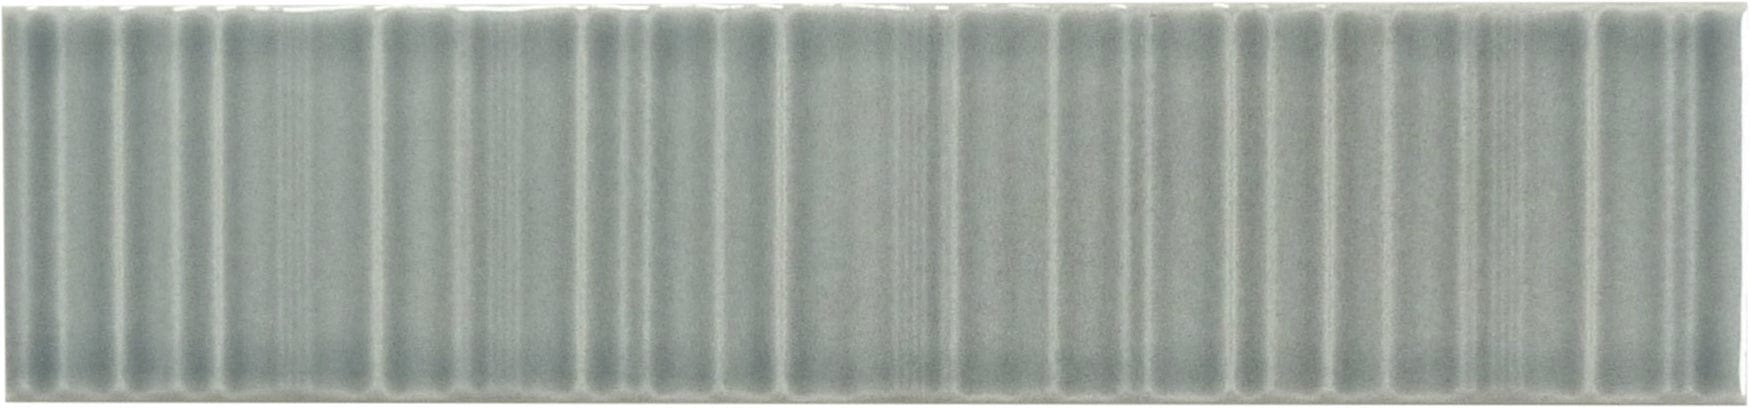 Illusion Wedgewood Grey Rippled Bar 2x8 Glossy Porcelain Tile Regency